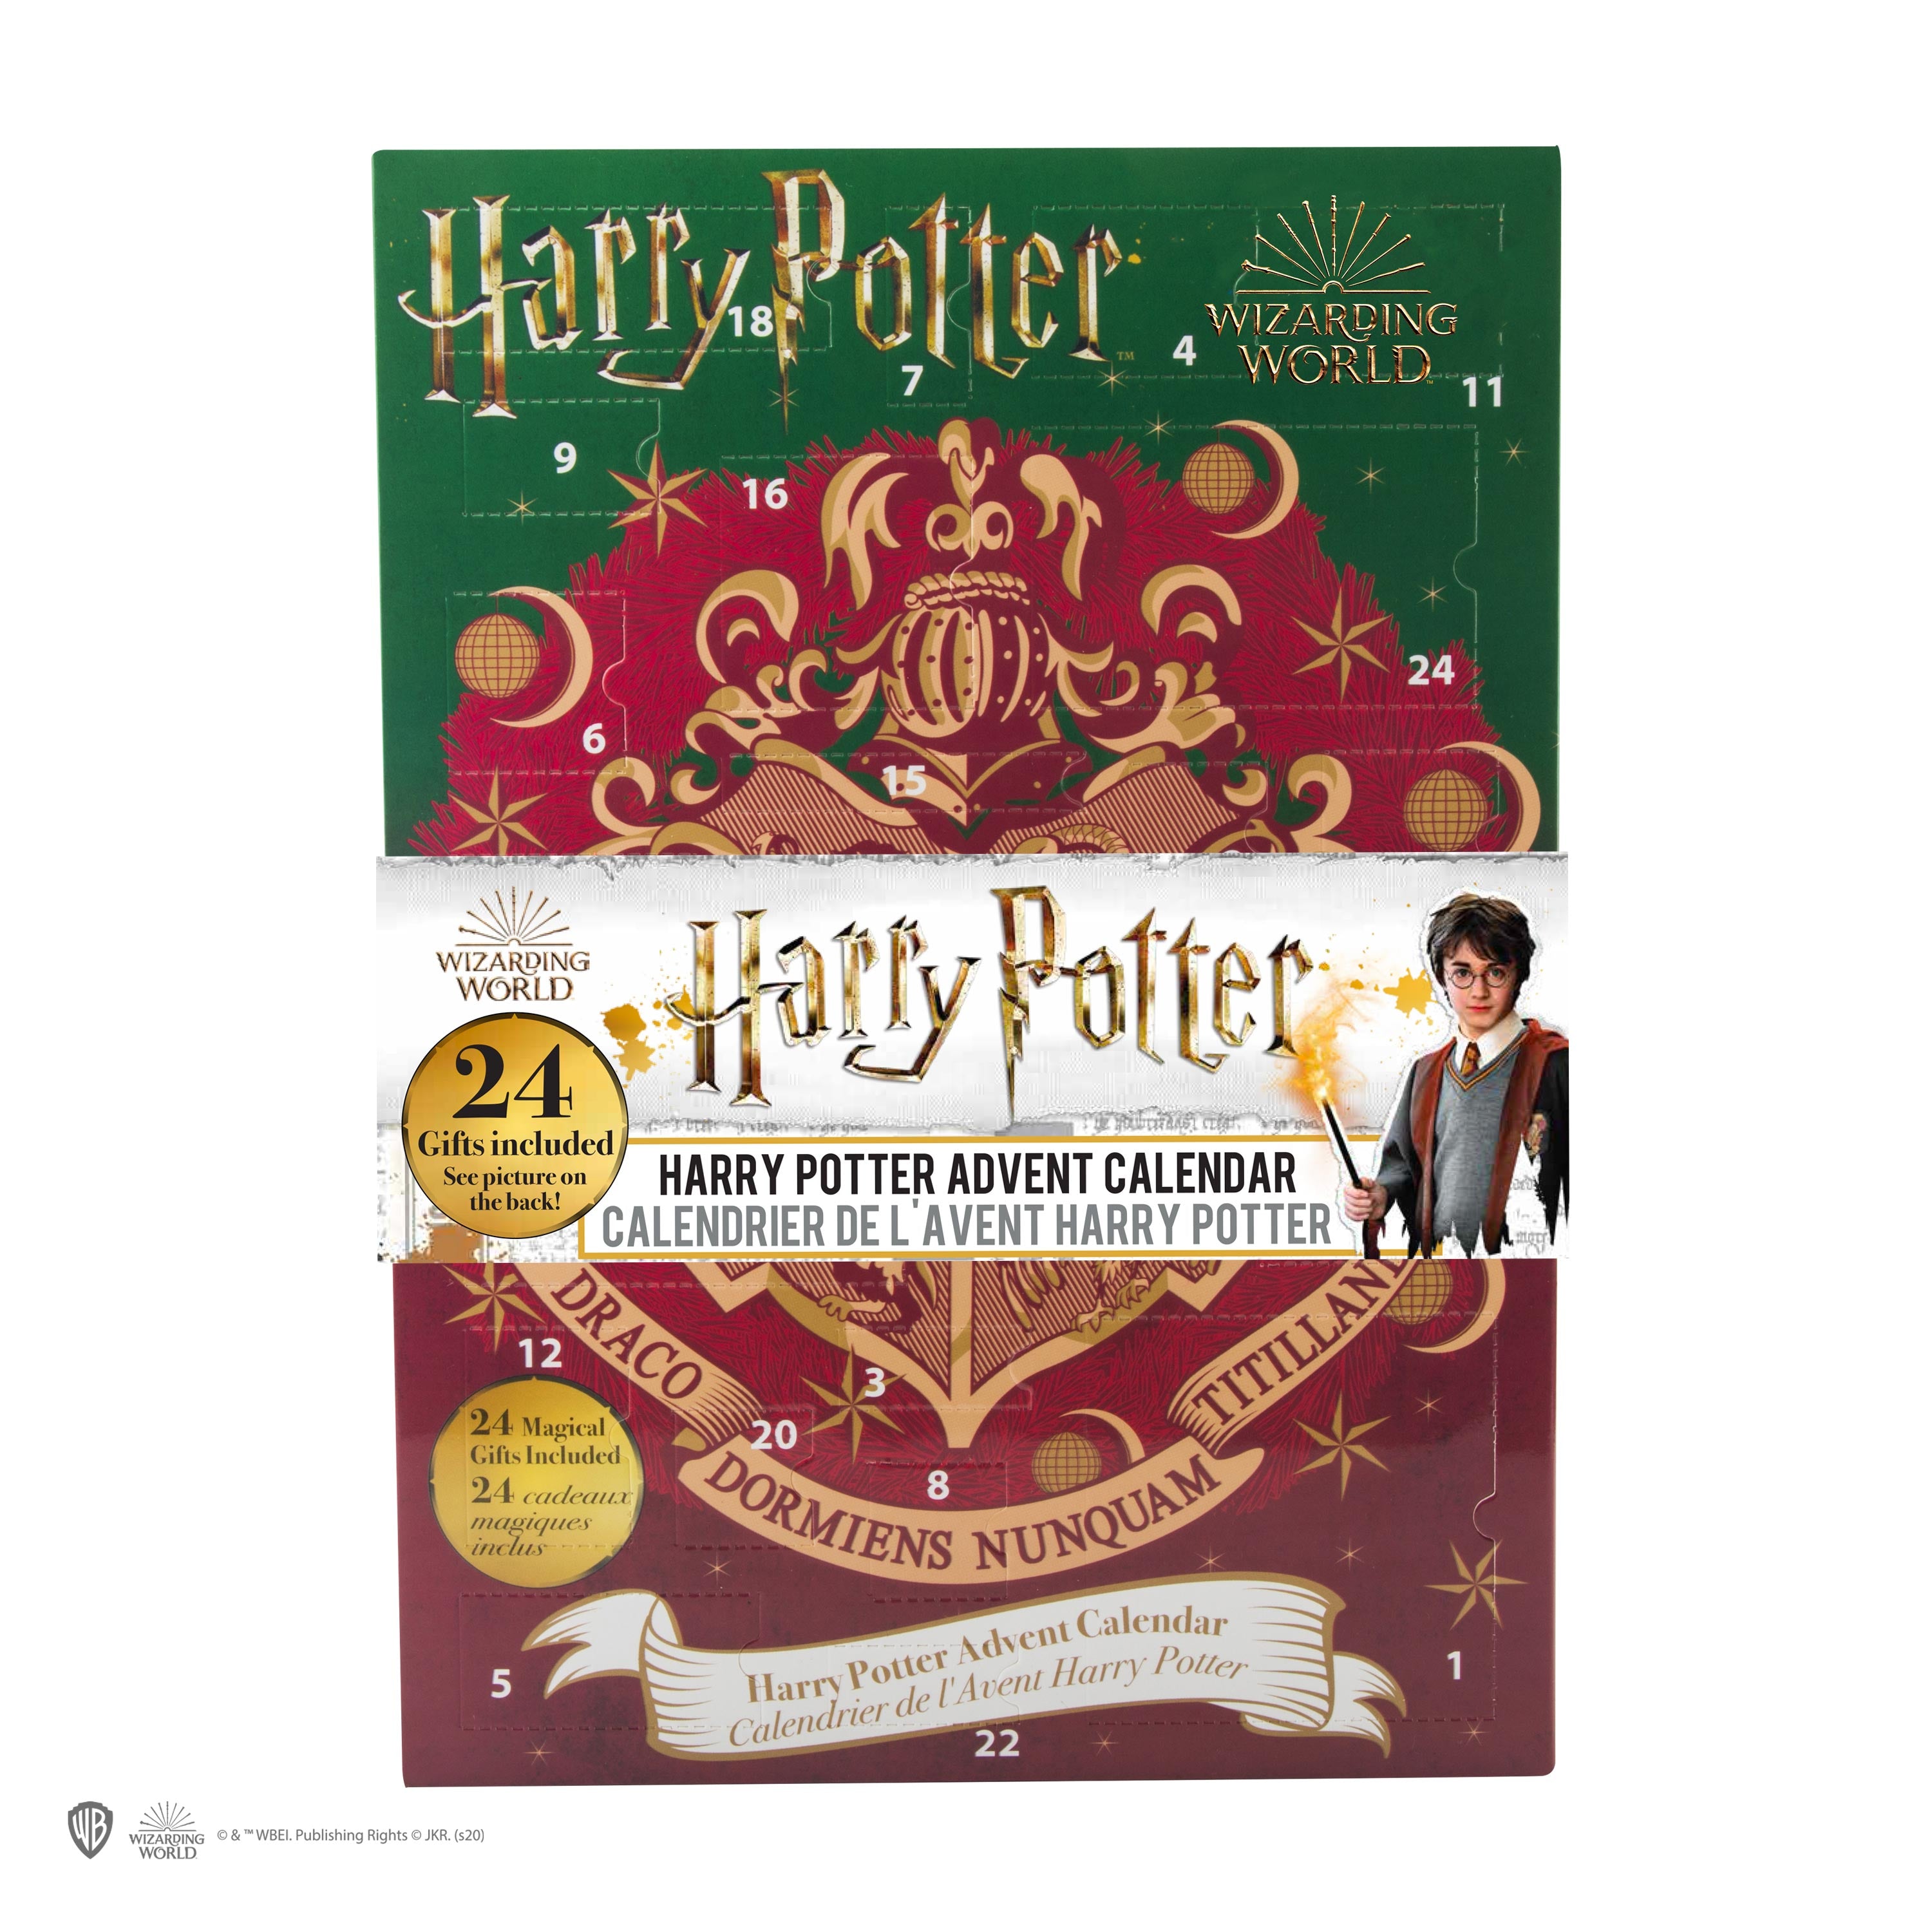 Harry Potter jewelry Advent calendar 2019